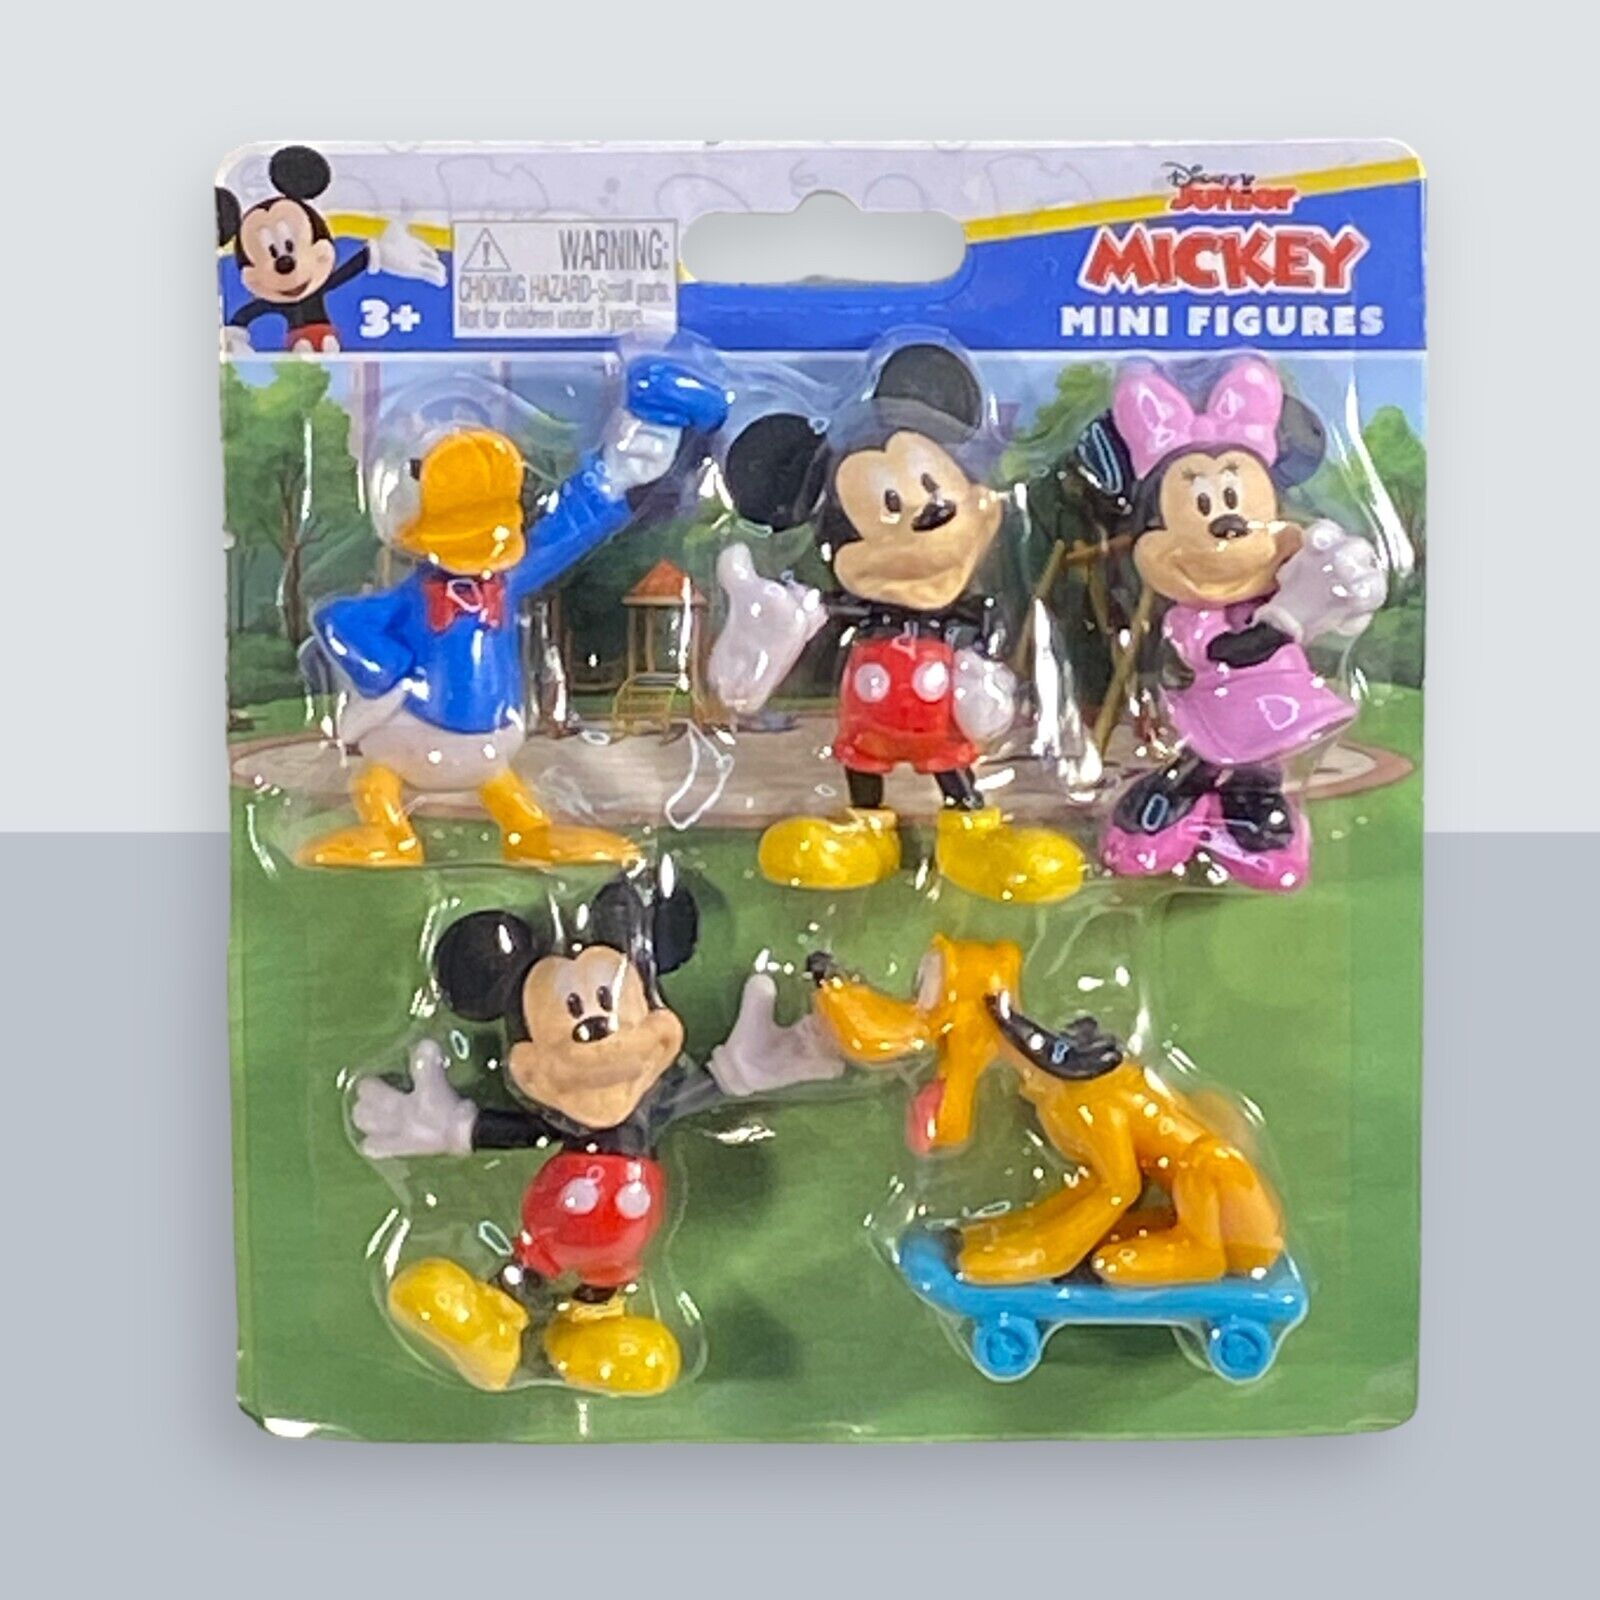 Disney: Disney Junior Mickey Mini Figures Set